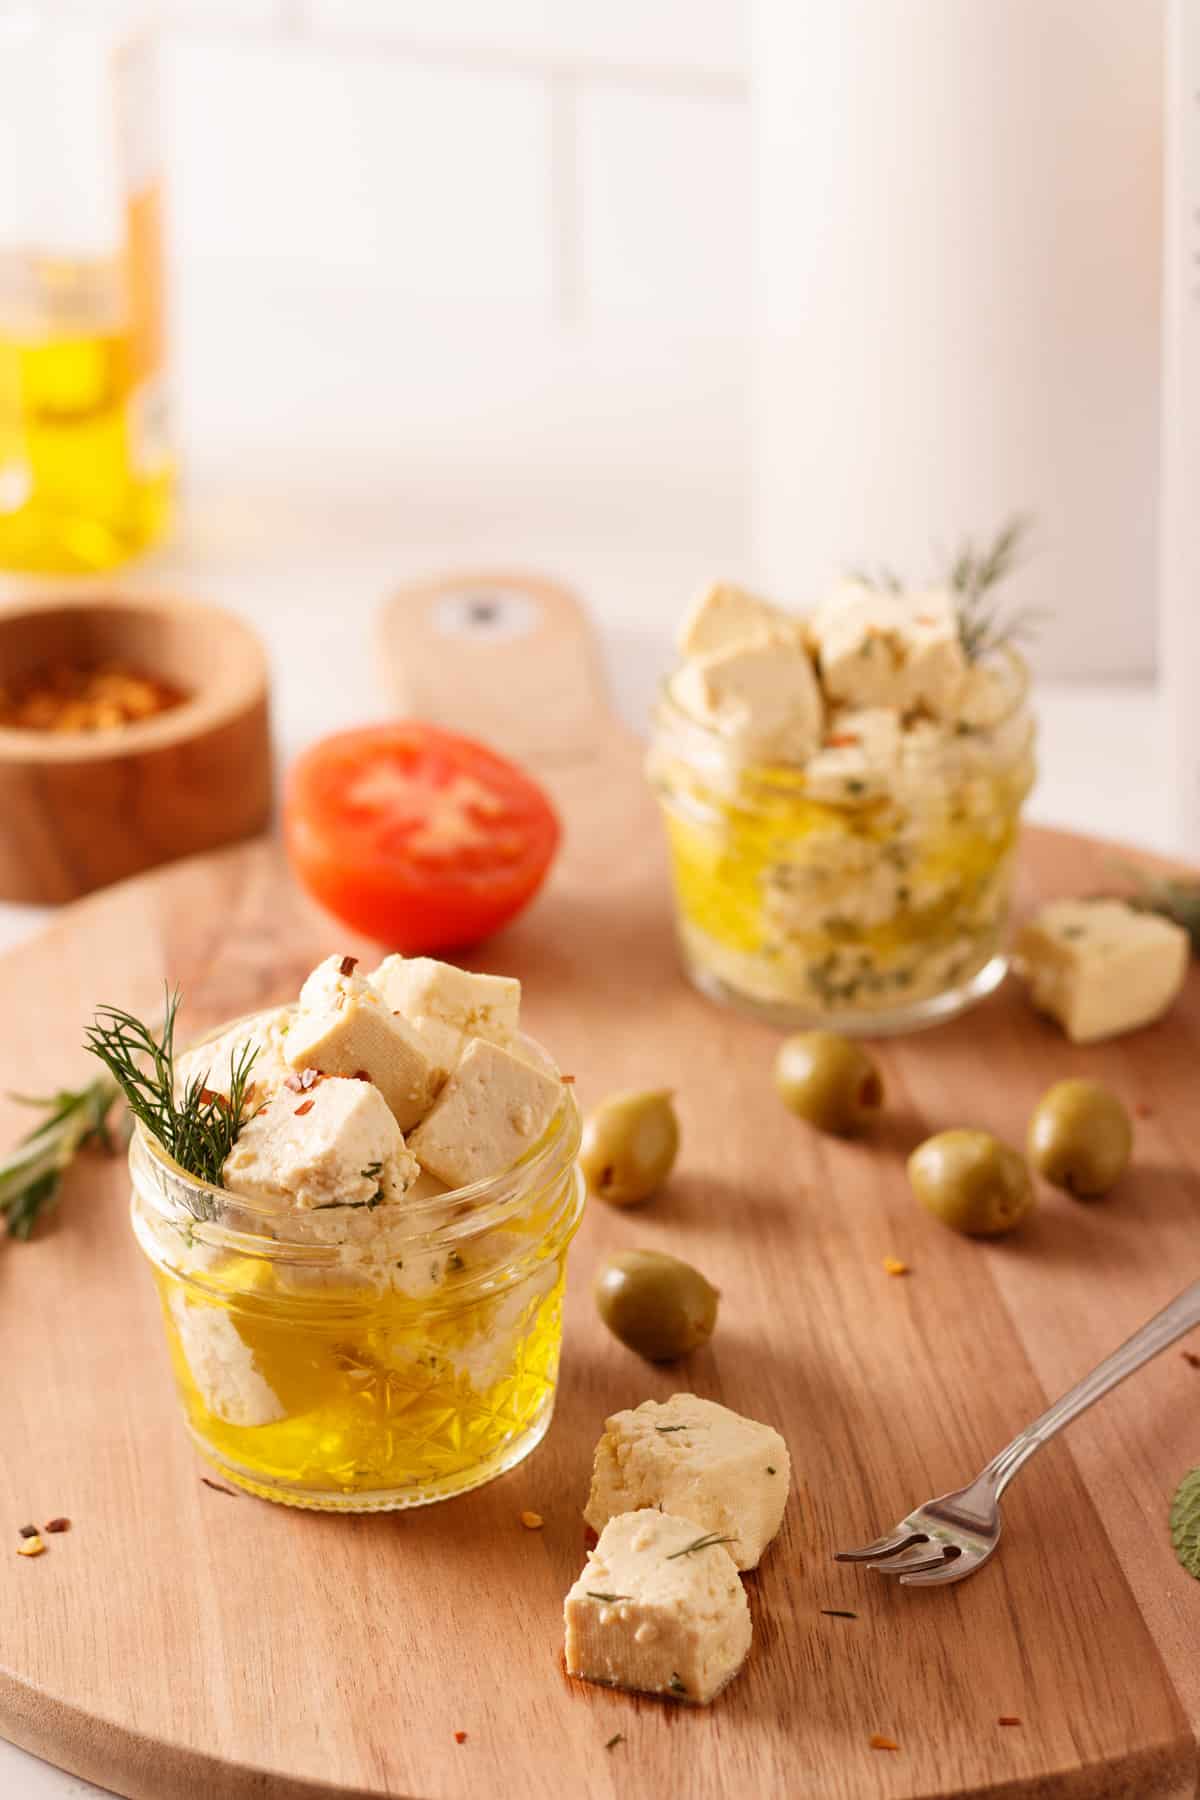 Vegan feta in small jars with olive oil.